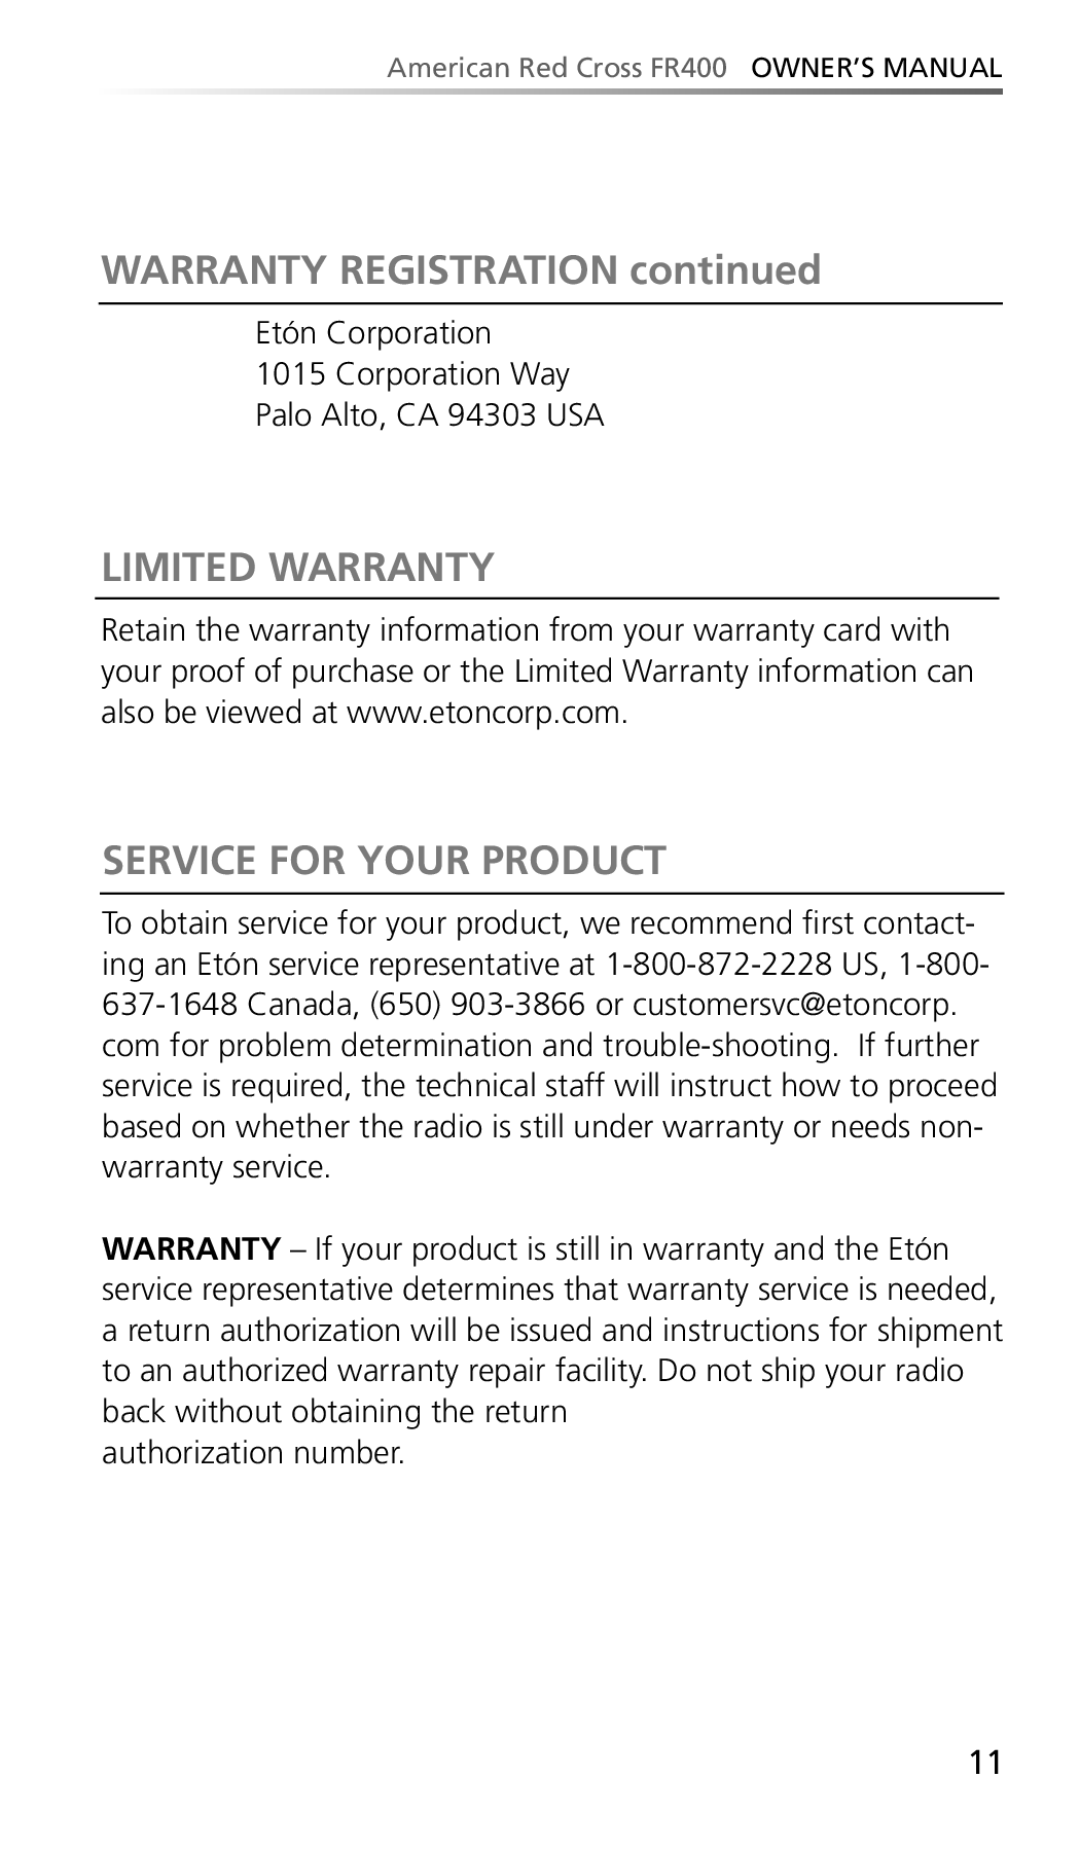 Eton FR400 owner manual Warranty Registration, Limited Warranty Service for Your Product 